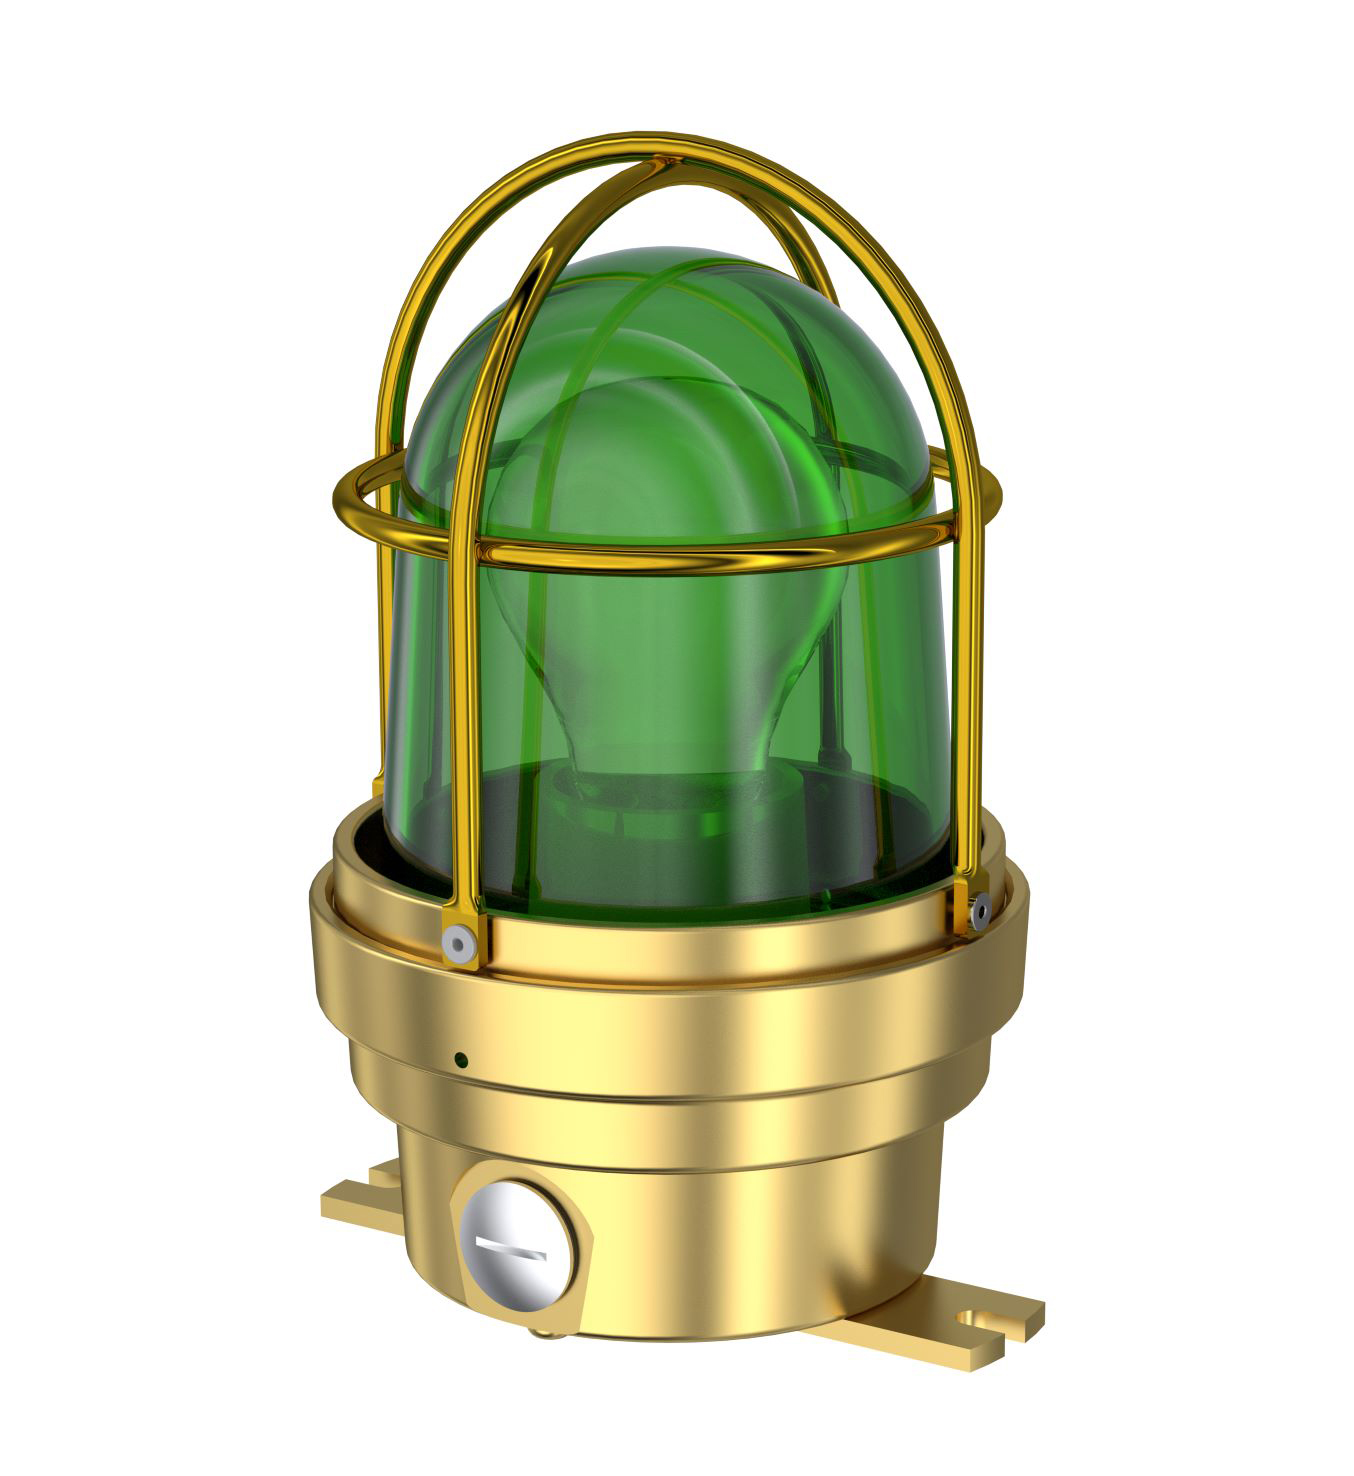 TEF 2438n Luminaire: Green Globe, For Low Energy Light Source E27, 230VAC, IP56, Brass/Polyc